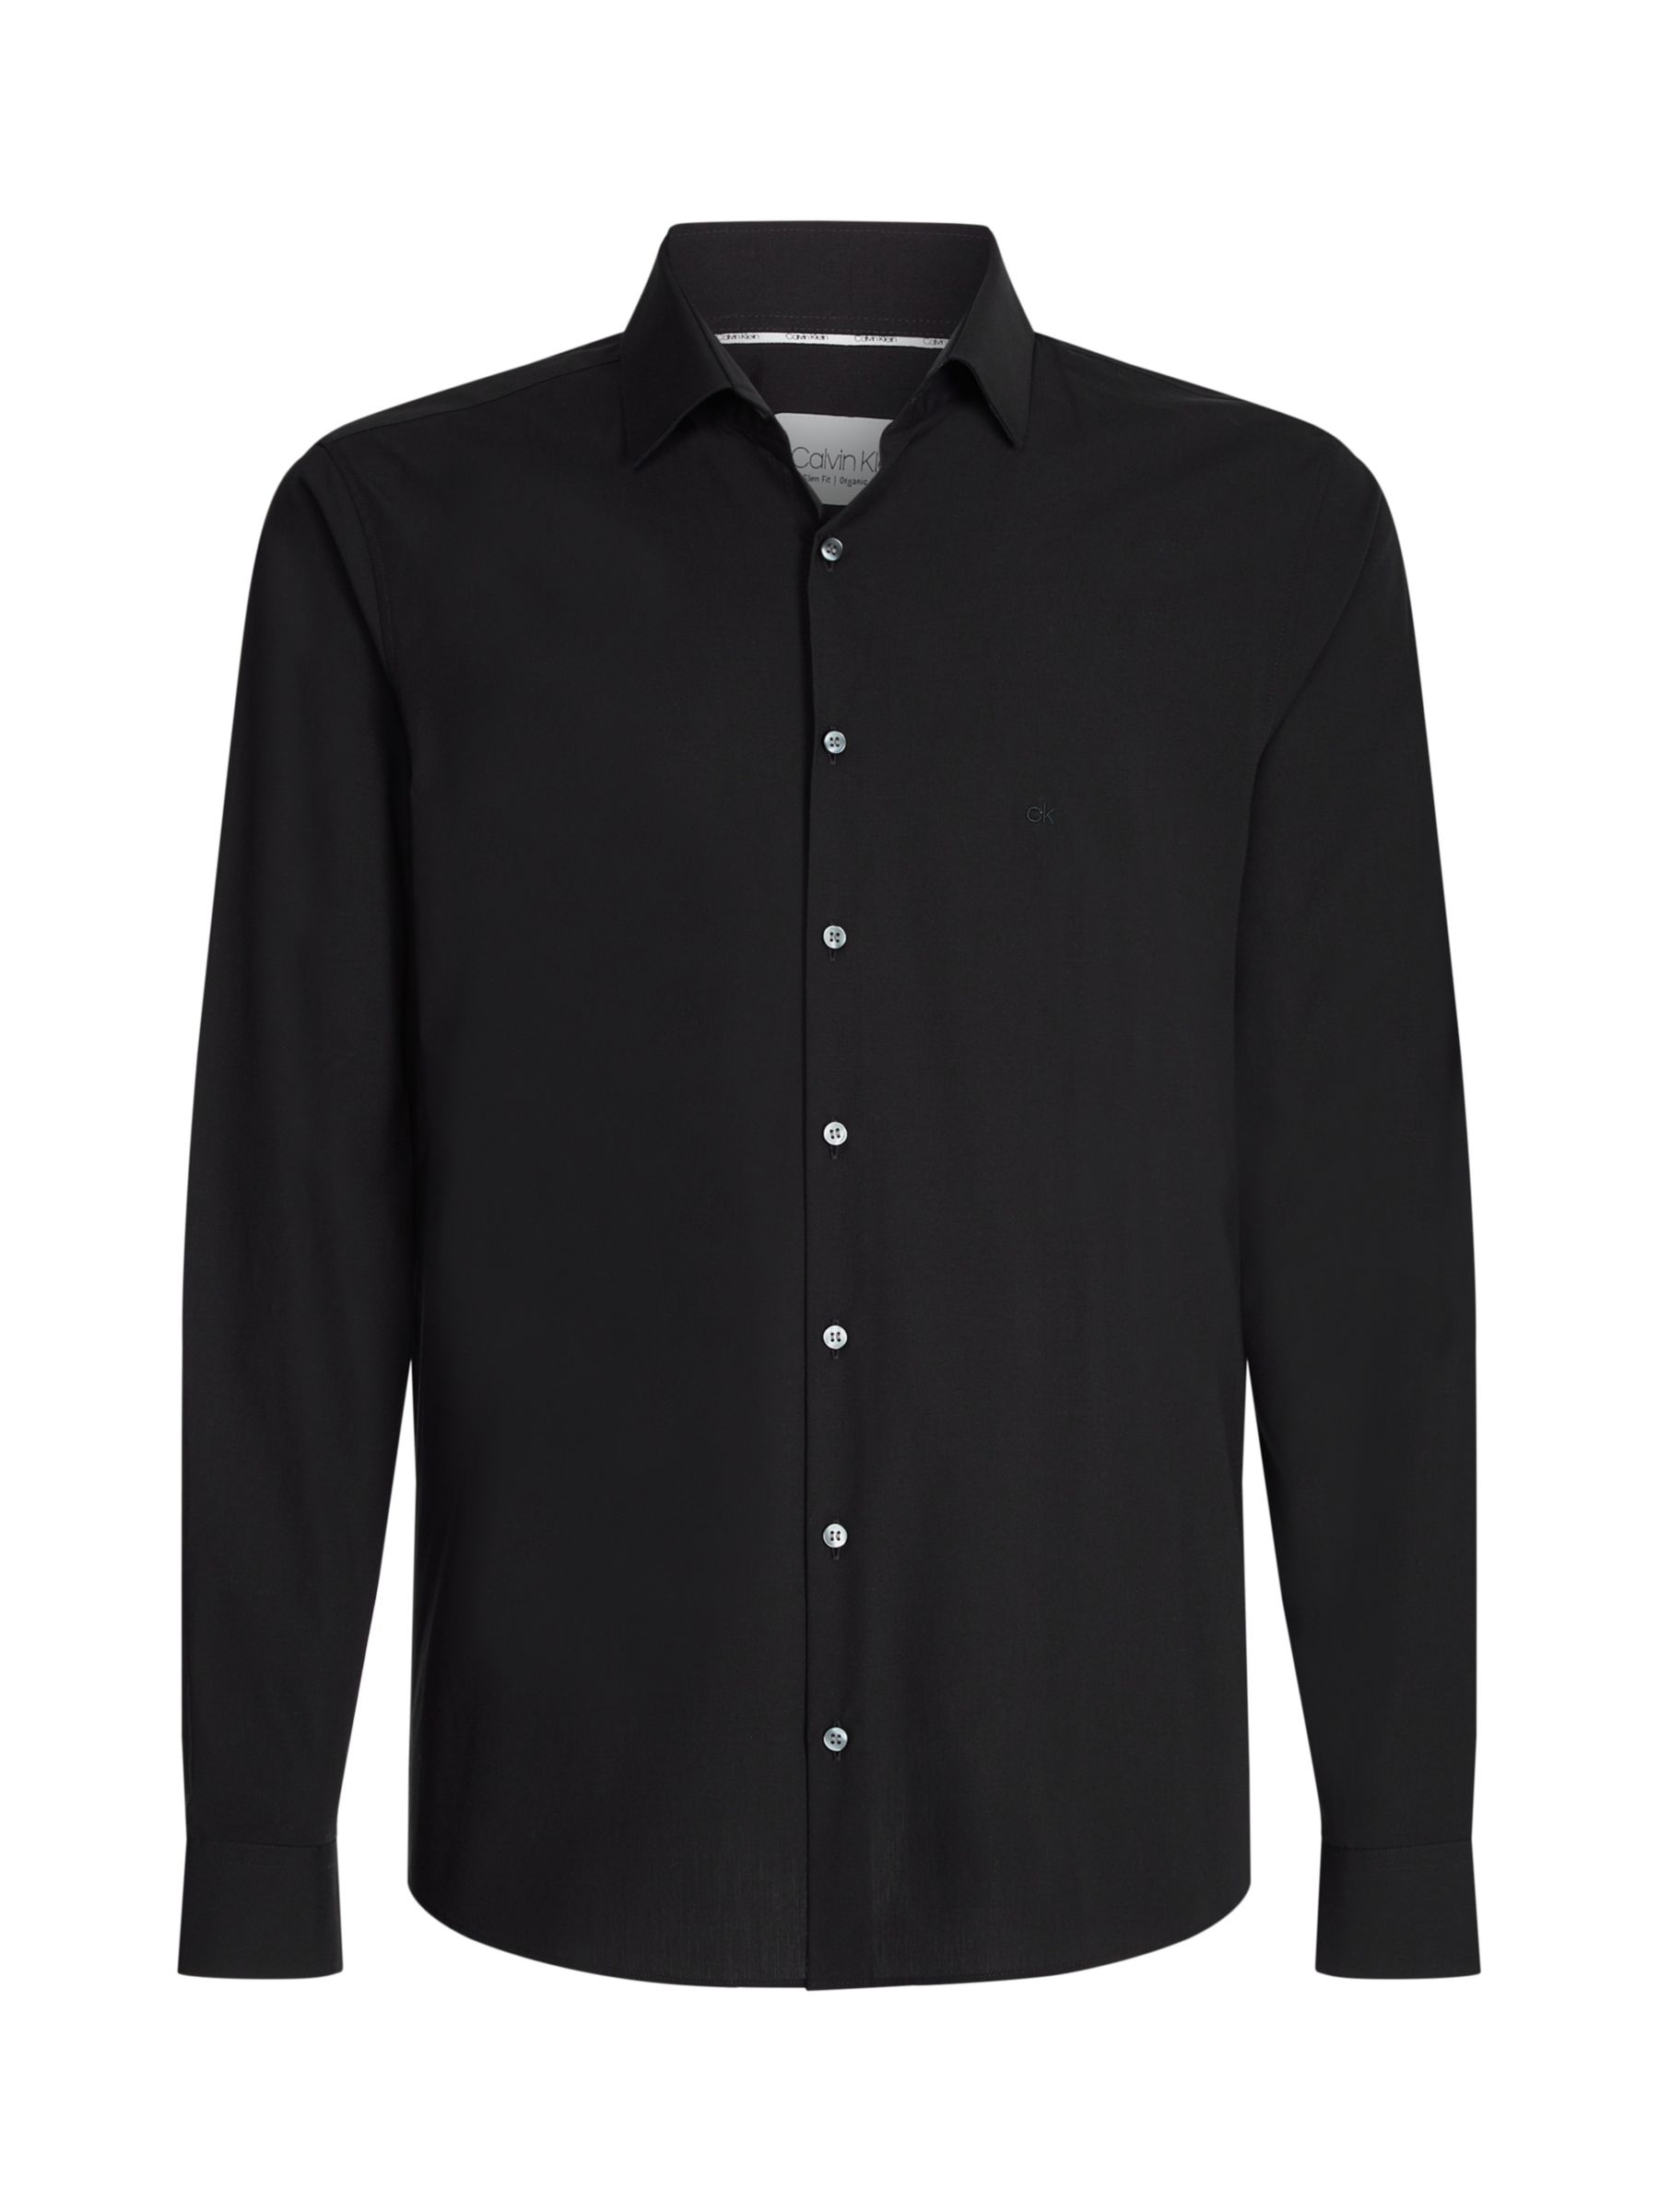 Calvin Klein Cotton Poplin Slim Fit Shirt, Black at John Lewis & Partners